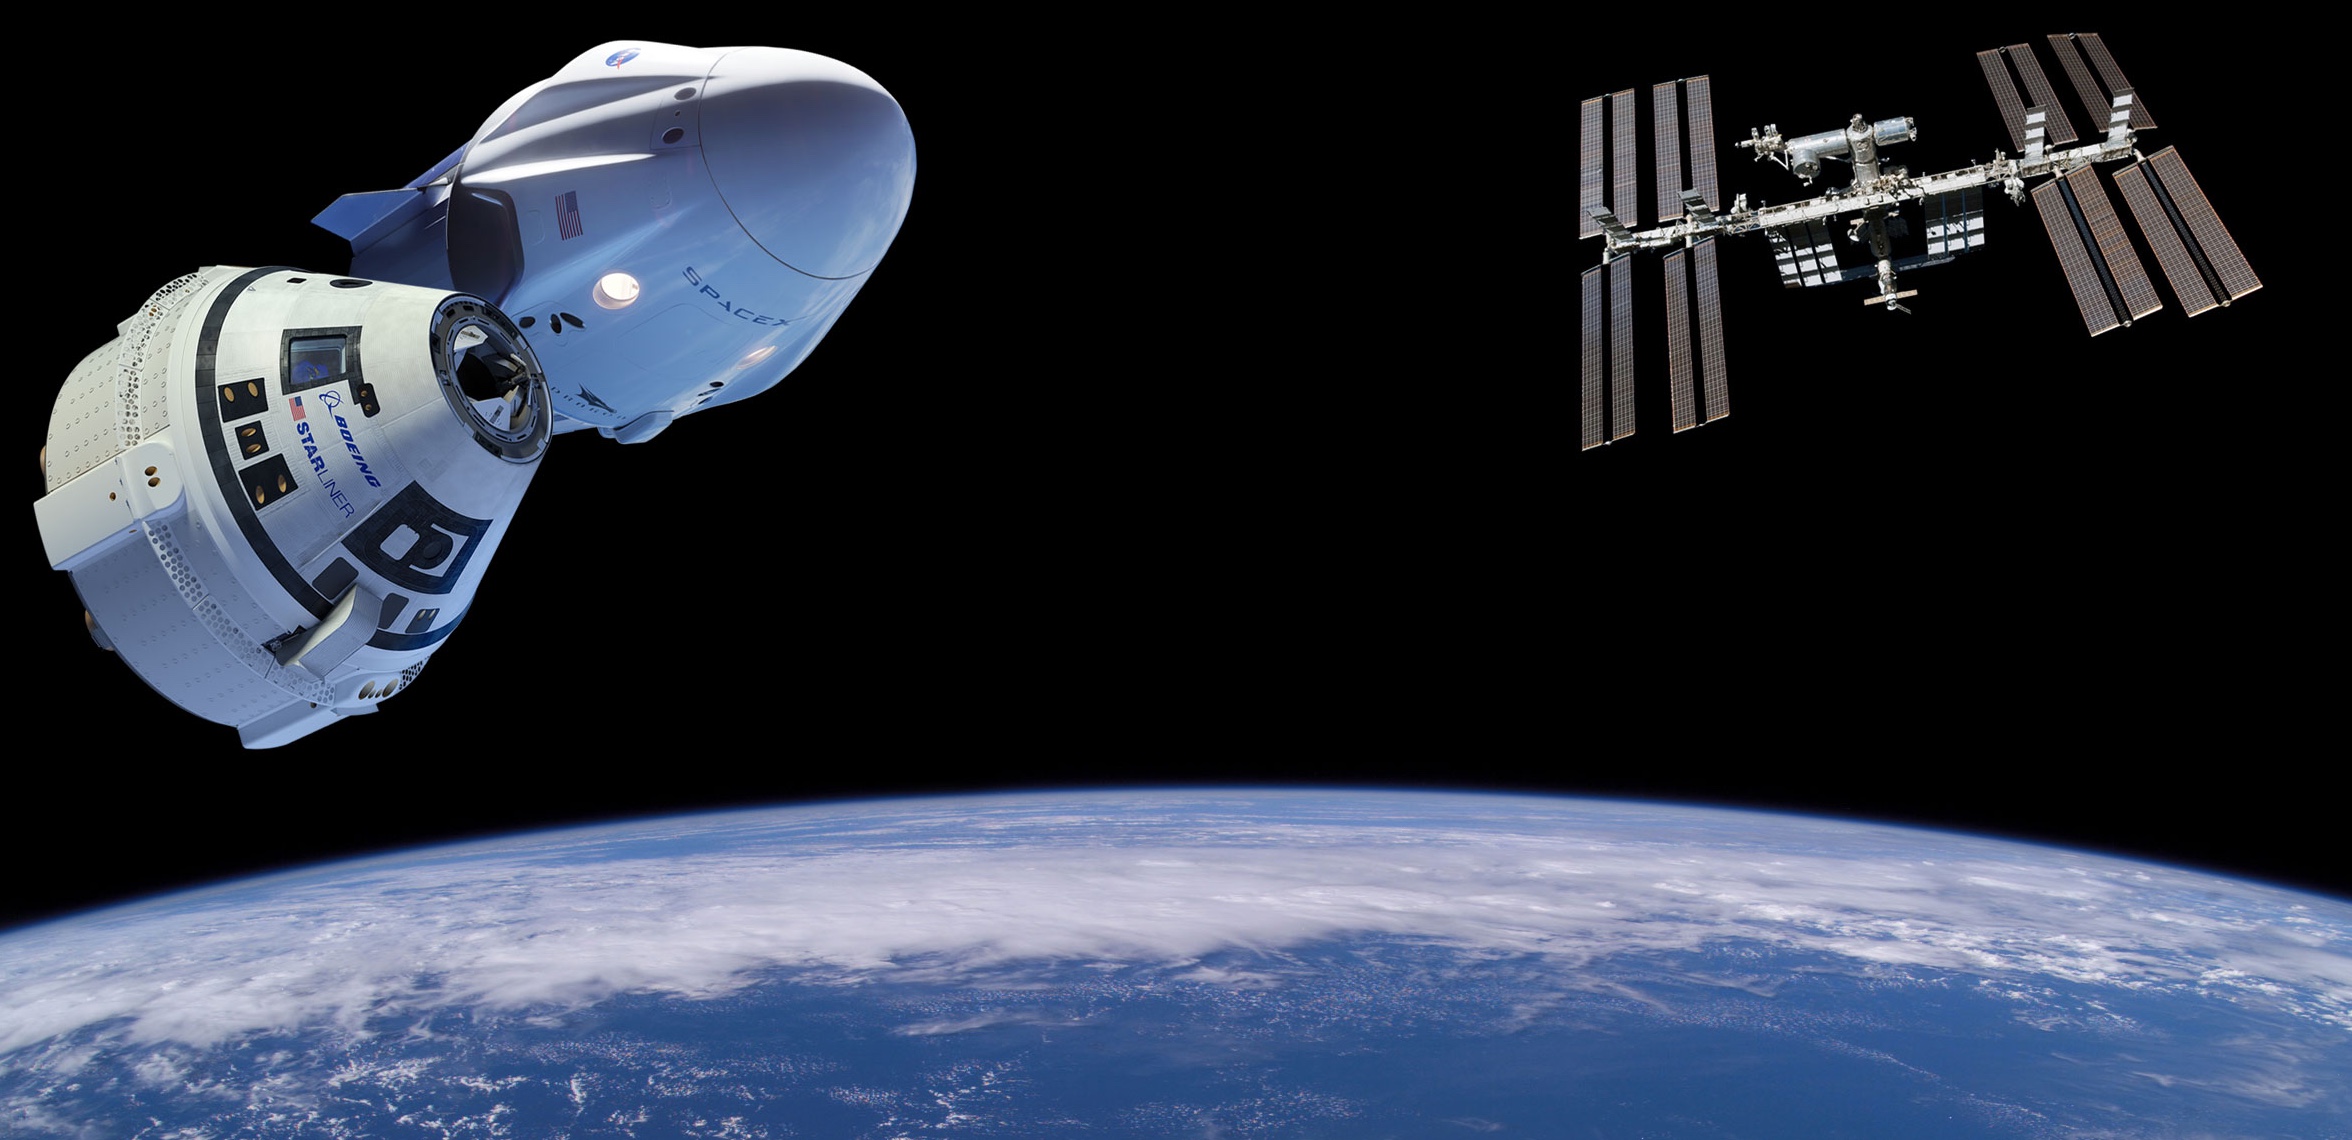 SpaceX’s Crew Dragon makes its first orbital launch tonight - Josh Loe